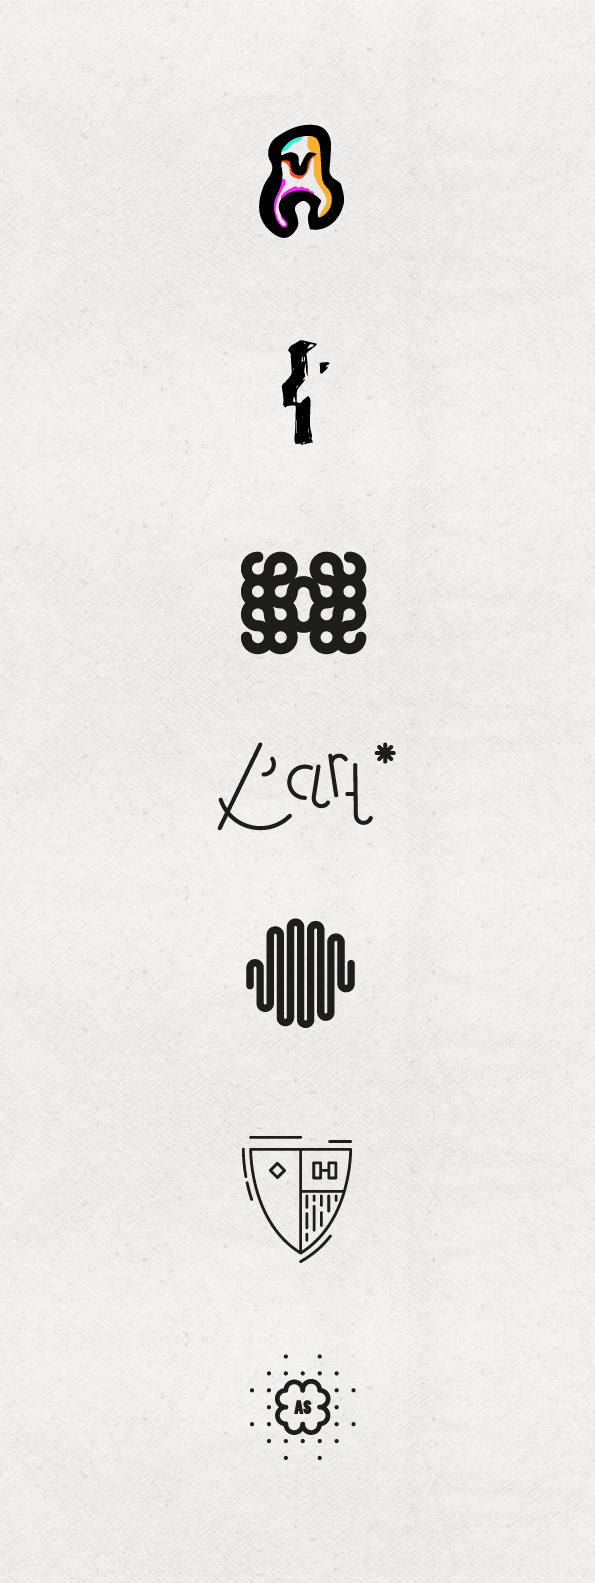 logos logo logofolio marks symbols Theo lebert